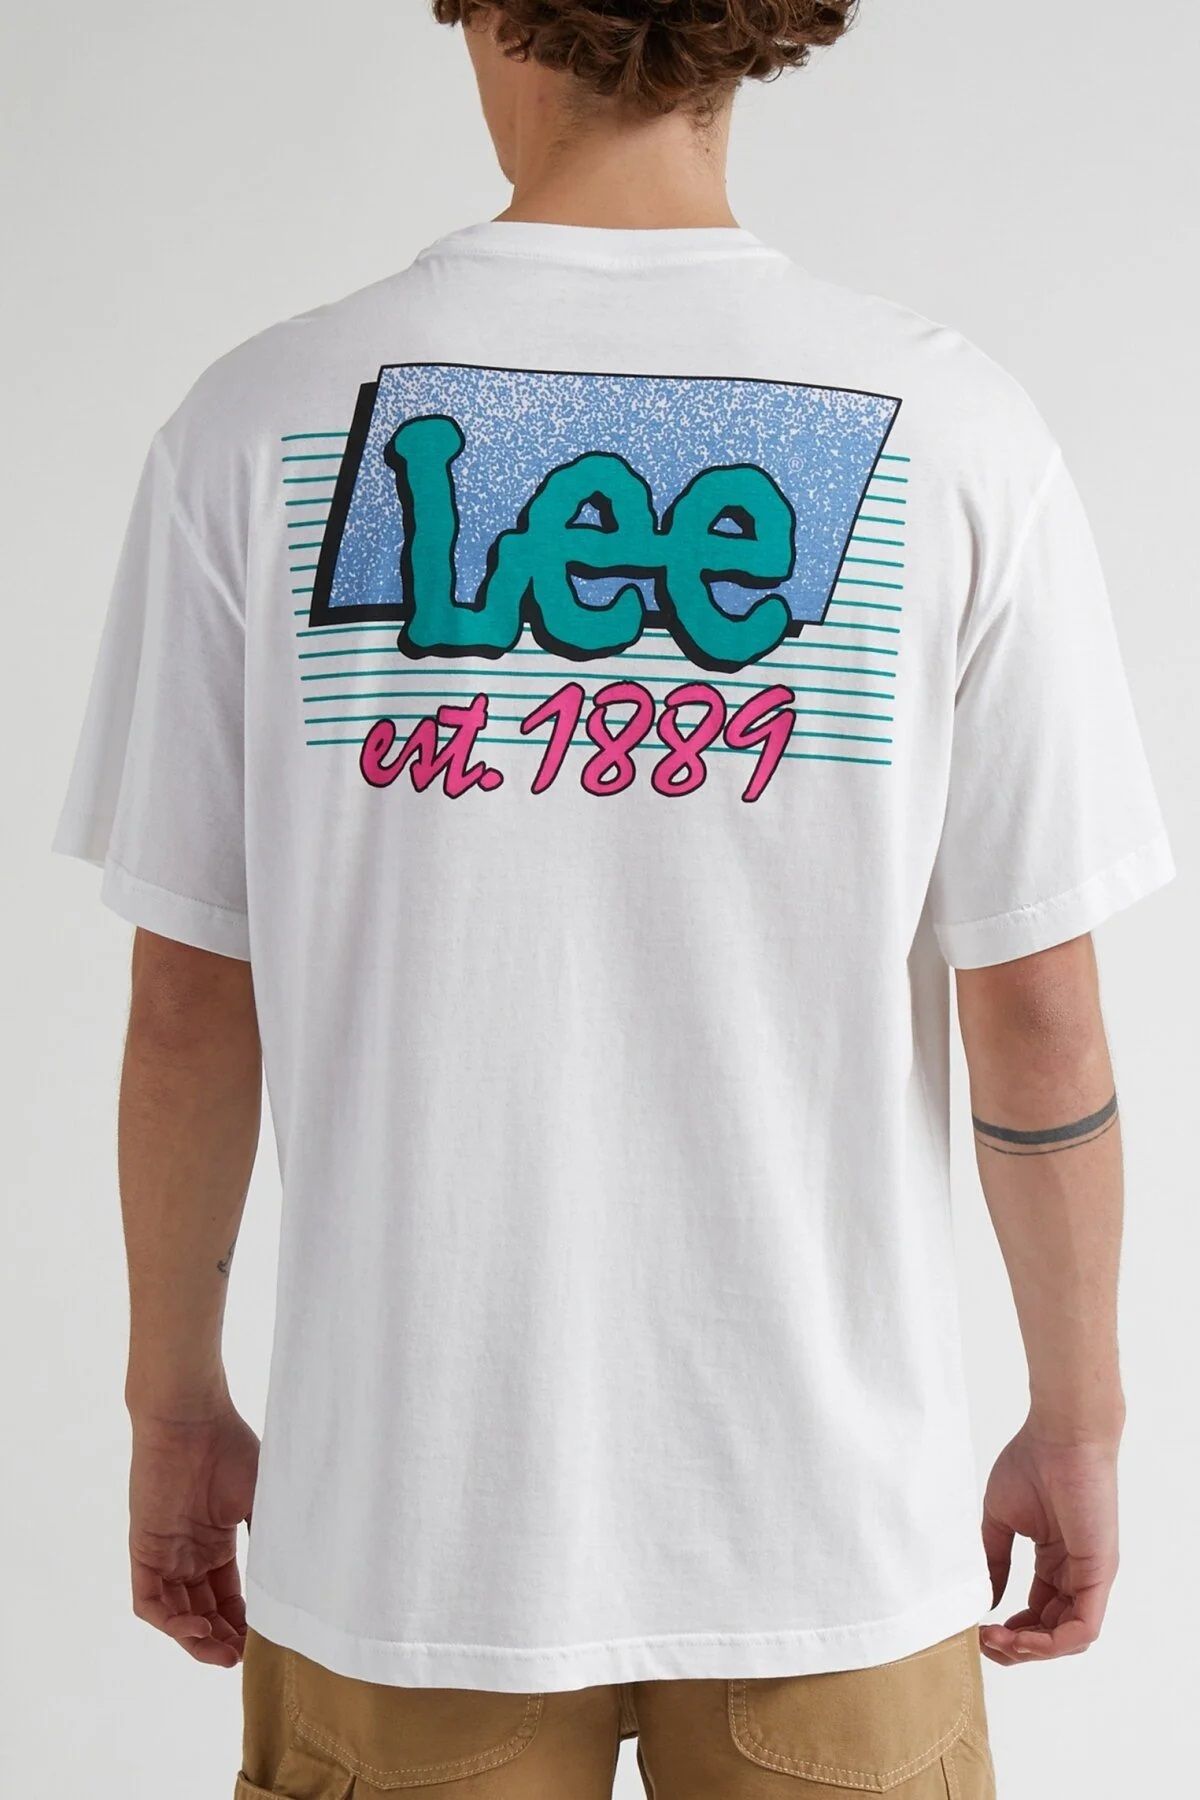 Lee لباس مناسب و راحت 100 ٪ یقه دوچرخه پنبه ای T Shirt